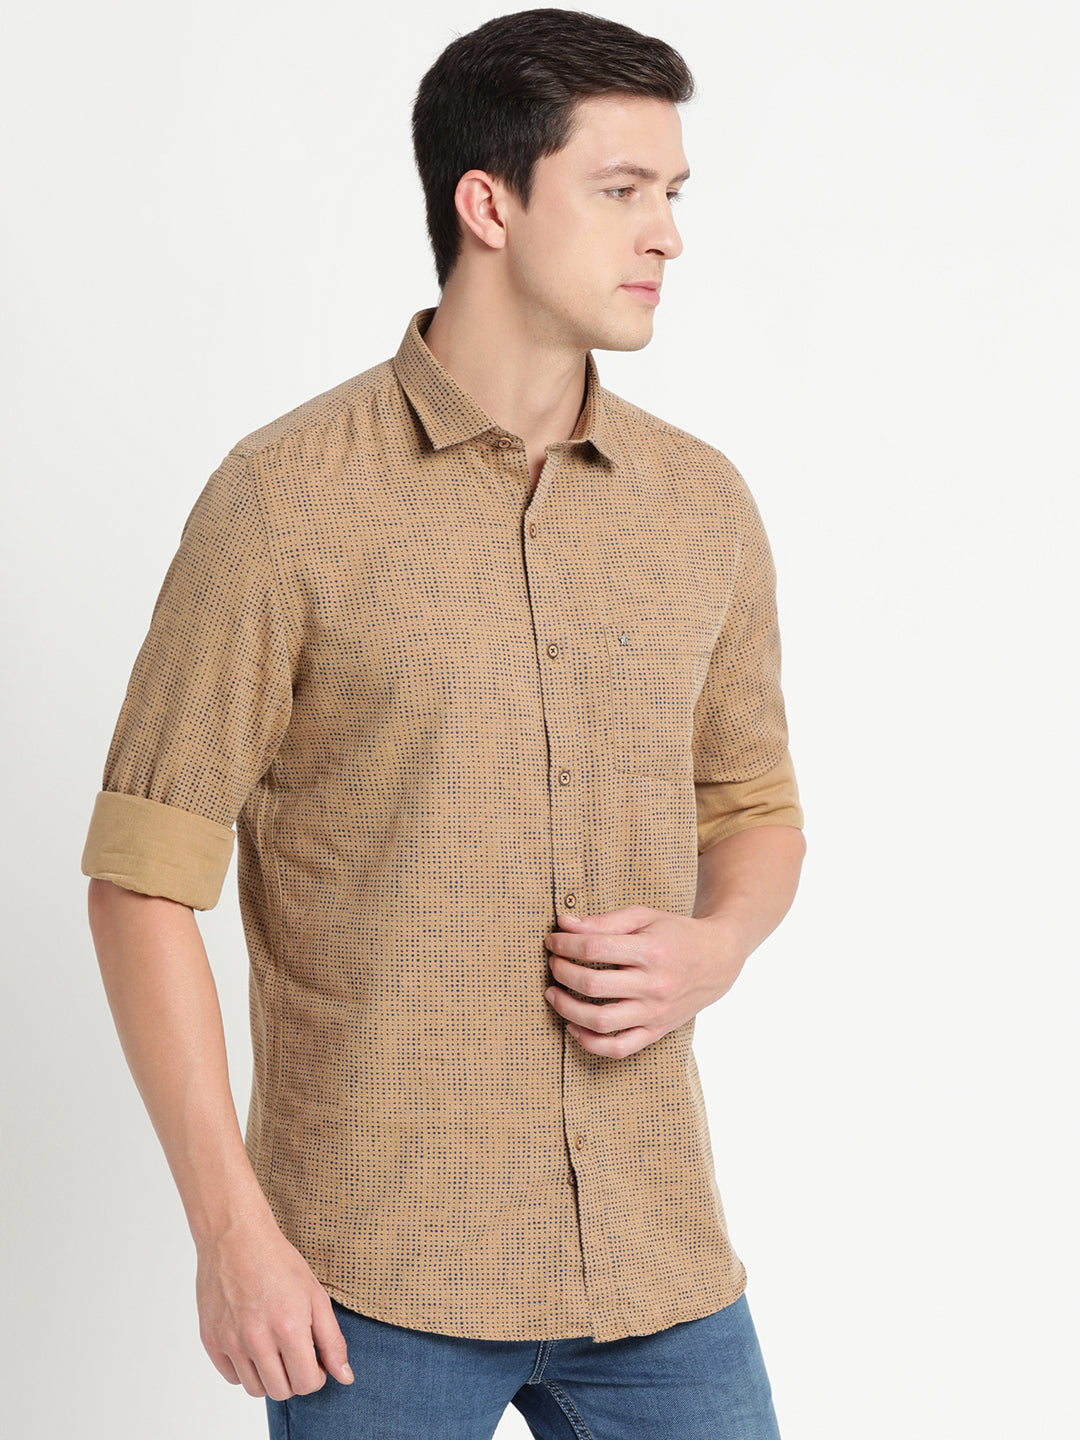 Cotton Melange Khaki Printed Slim Fit Full Sleeve Casual Shirt